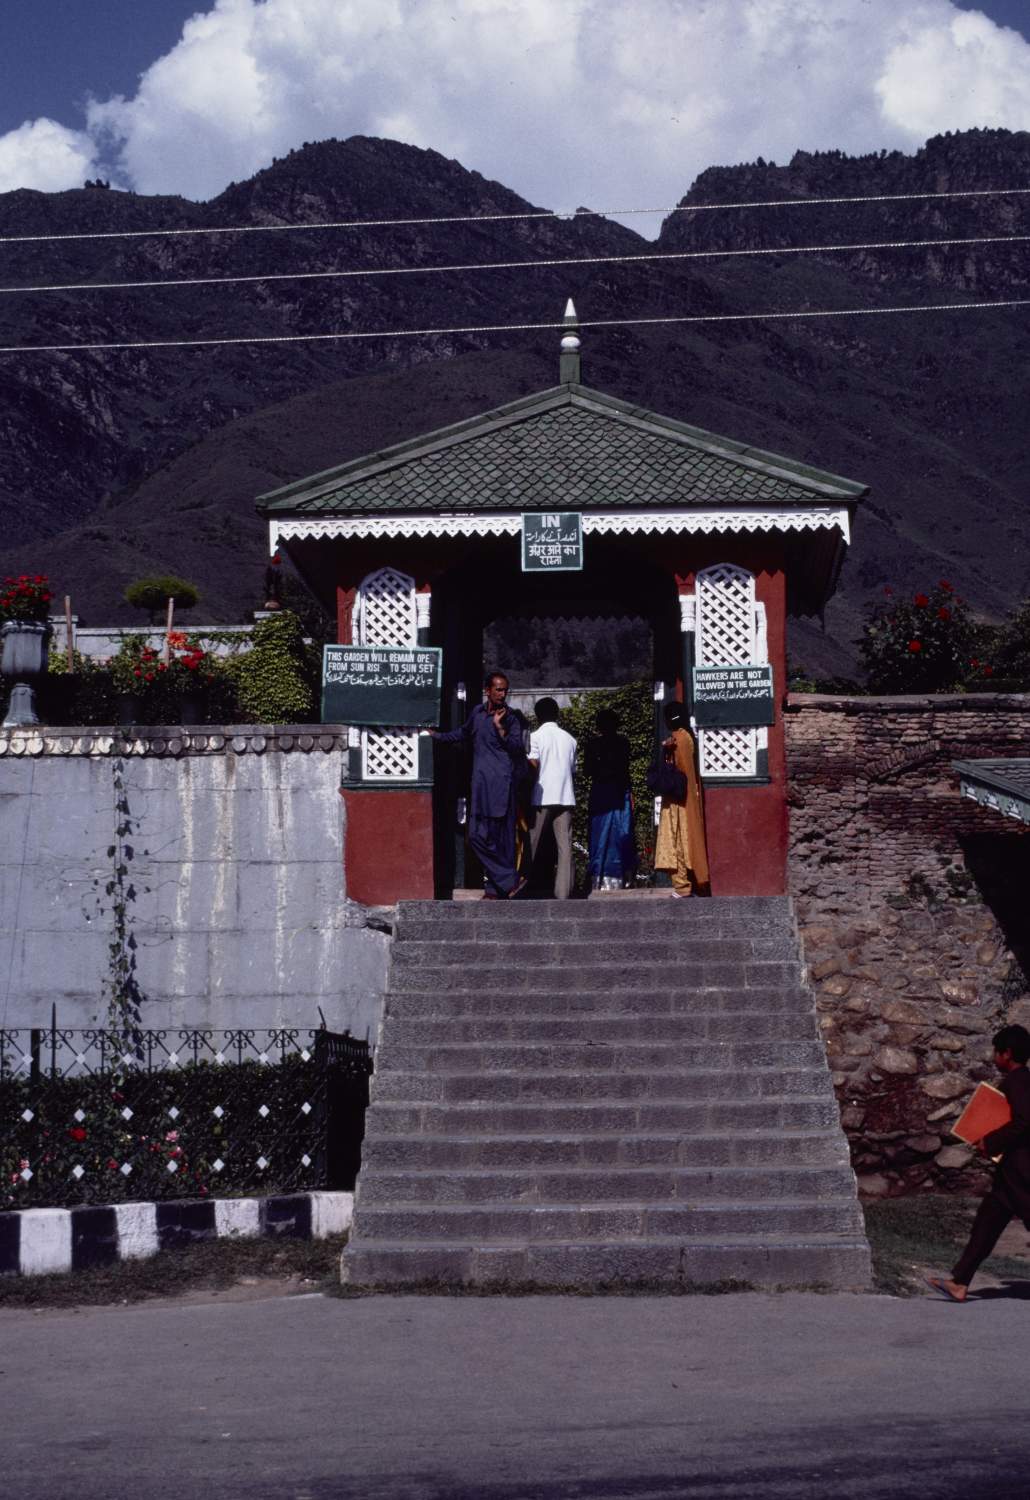 Nishat Bagh - Entrance pavilion from street level facing east.